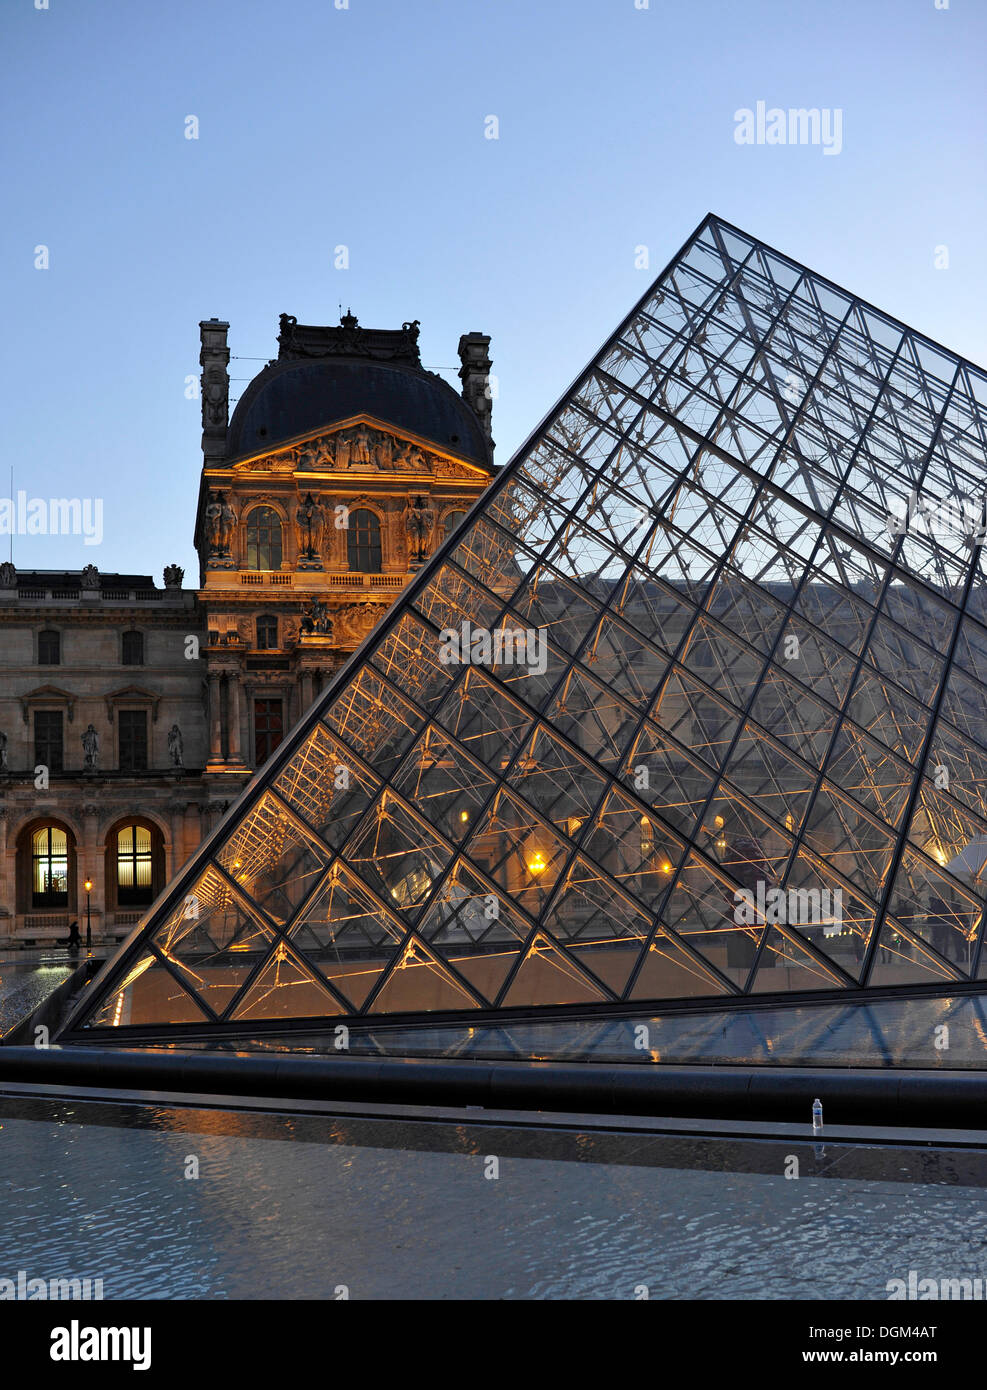 Pavilion Richelieu in the evening, glass pyramid entrance in front, Palais du Louvre or Louvre Palace museum, Paris, France Stock Photo